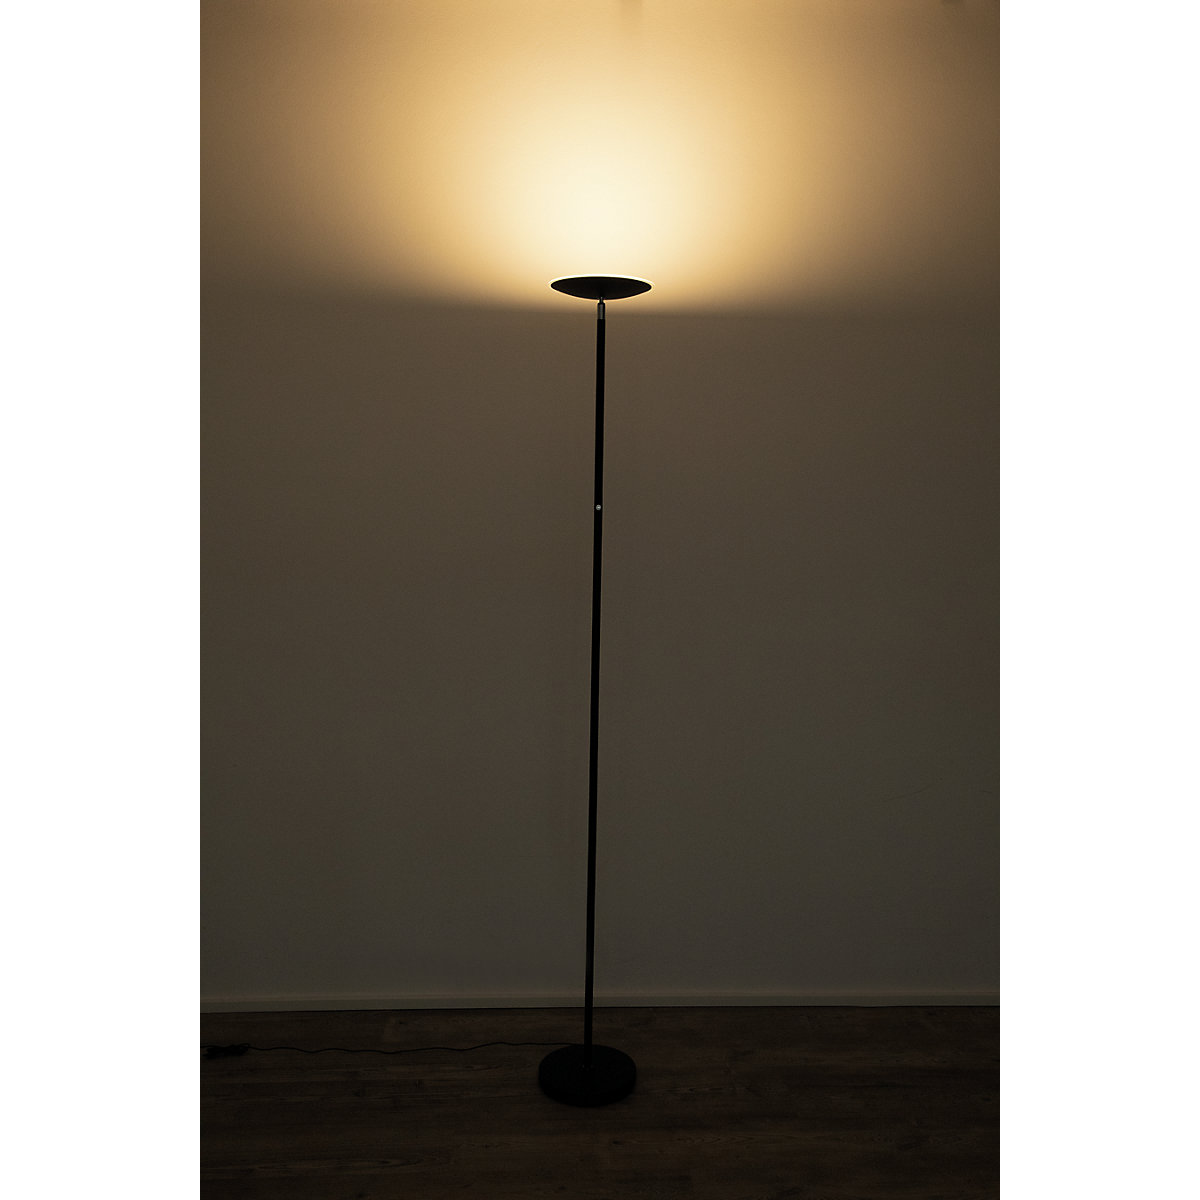 Stoječa LED-svetilka MAULsphere, obrnjena v strop – MAUL (Slika izdelka 6)-5